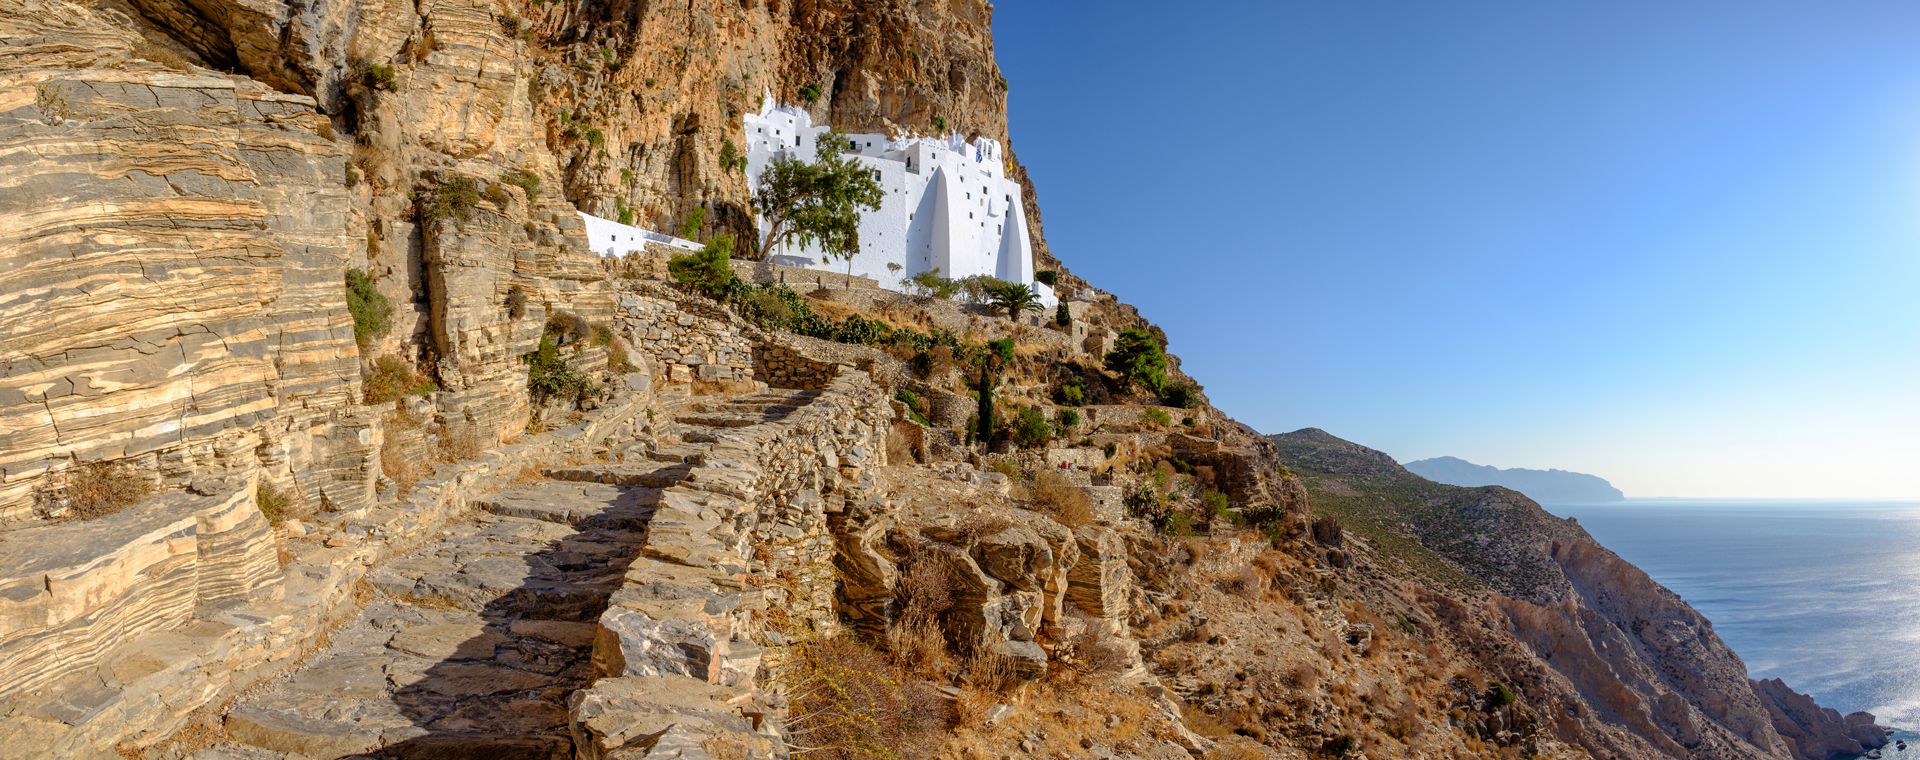 Amorgos : panorama sur le monastère de la Panagia Chozoviotissa